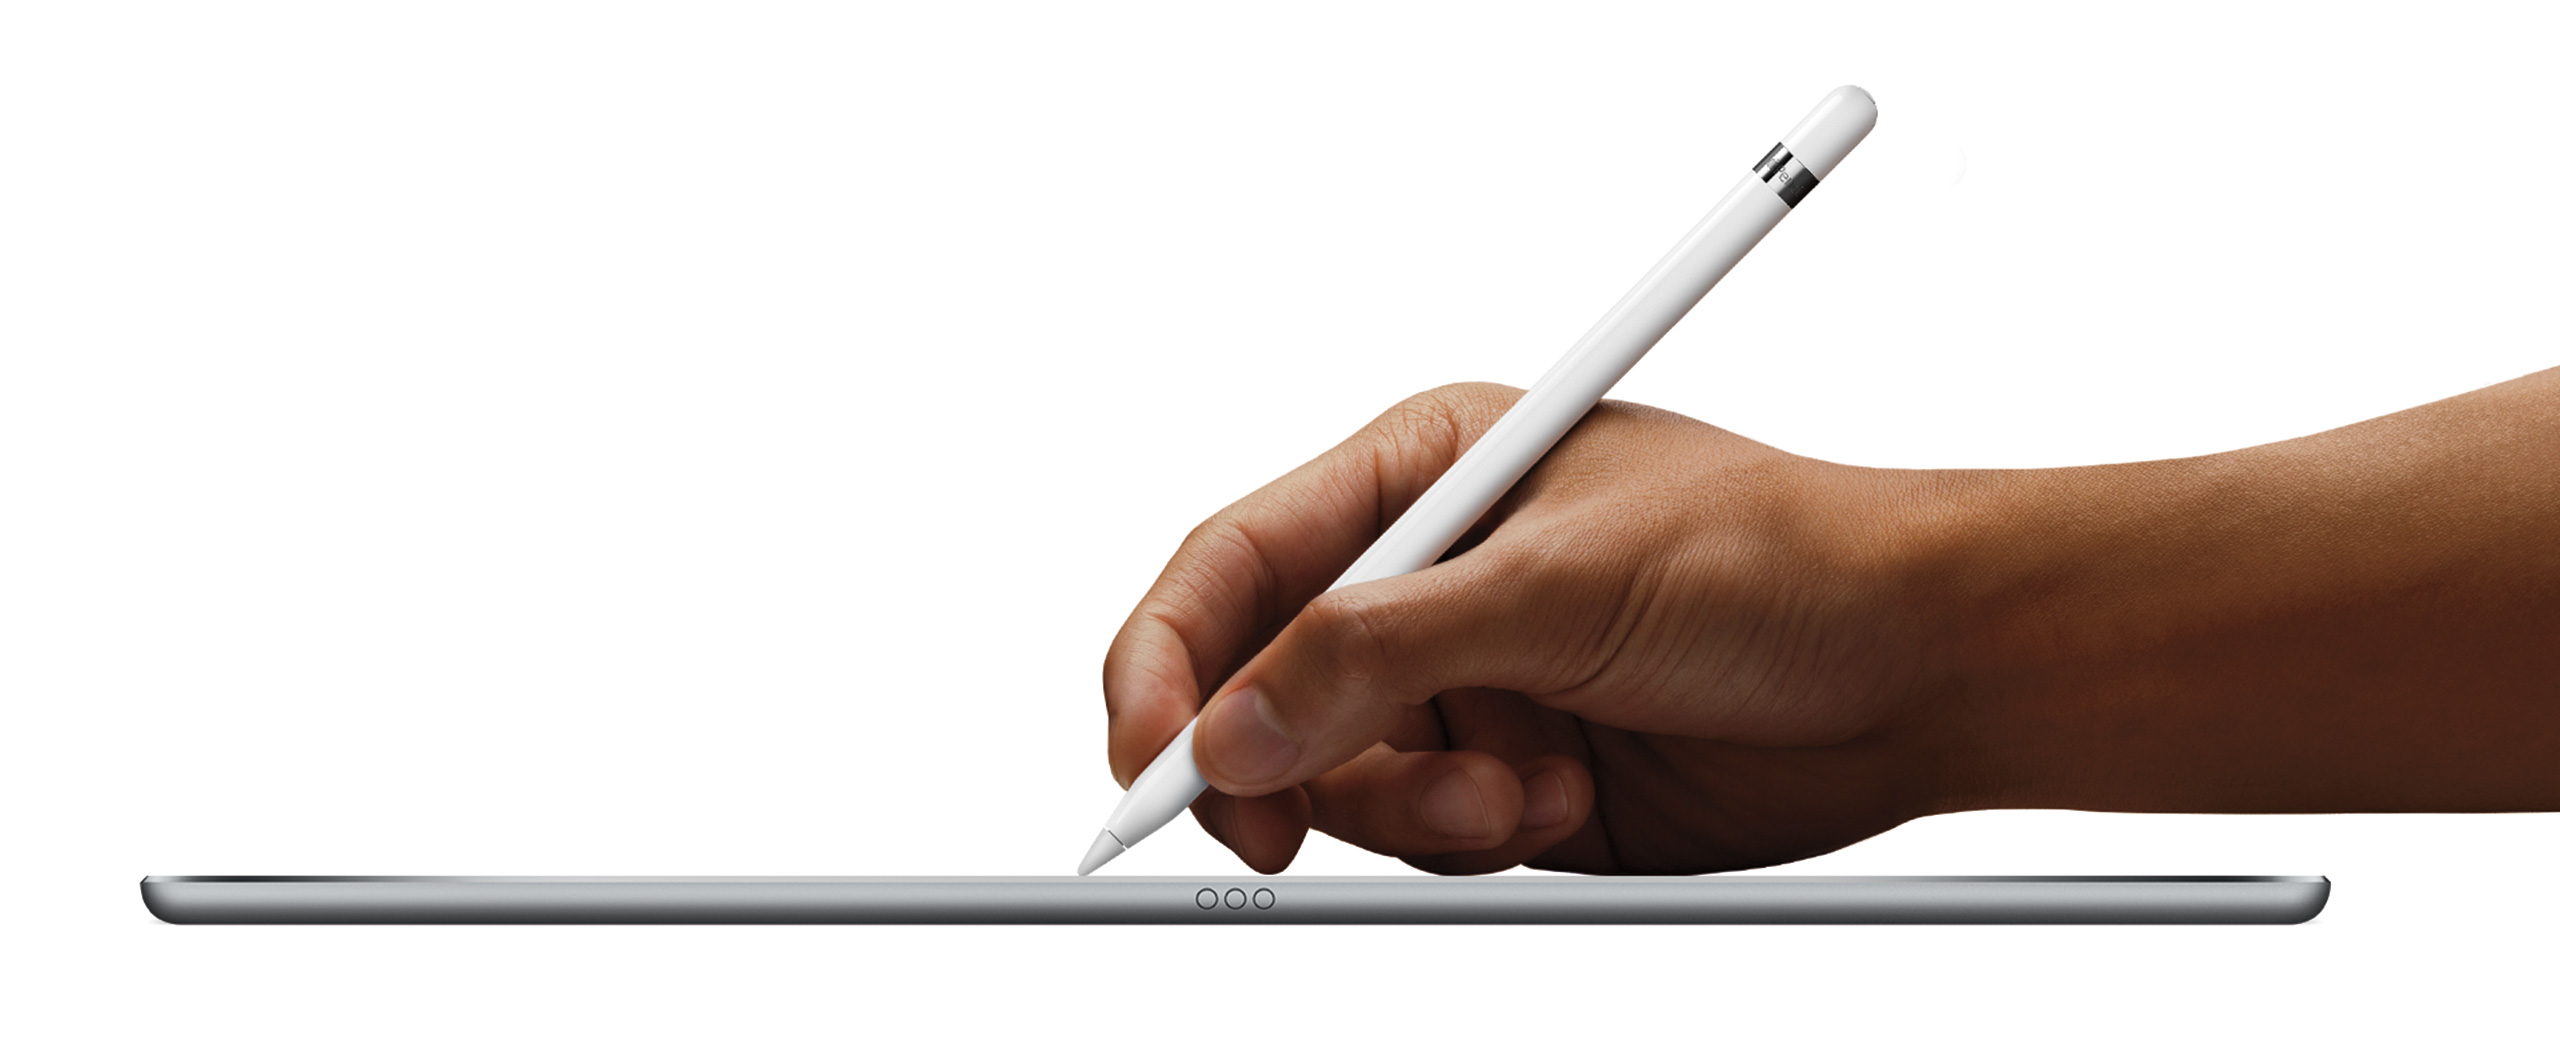 Apple Introduces iPad Pro Featuring Massive 12.9-inch Retina Display, Apple Pencil Stylus